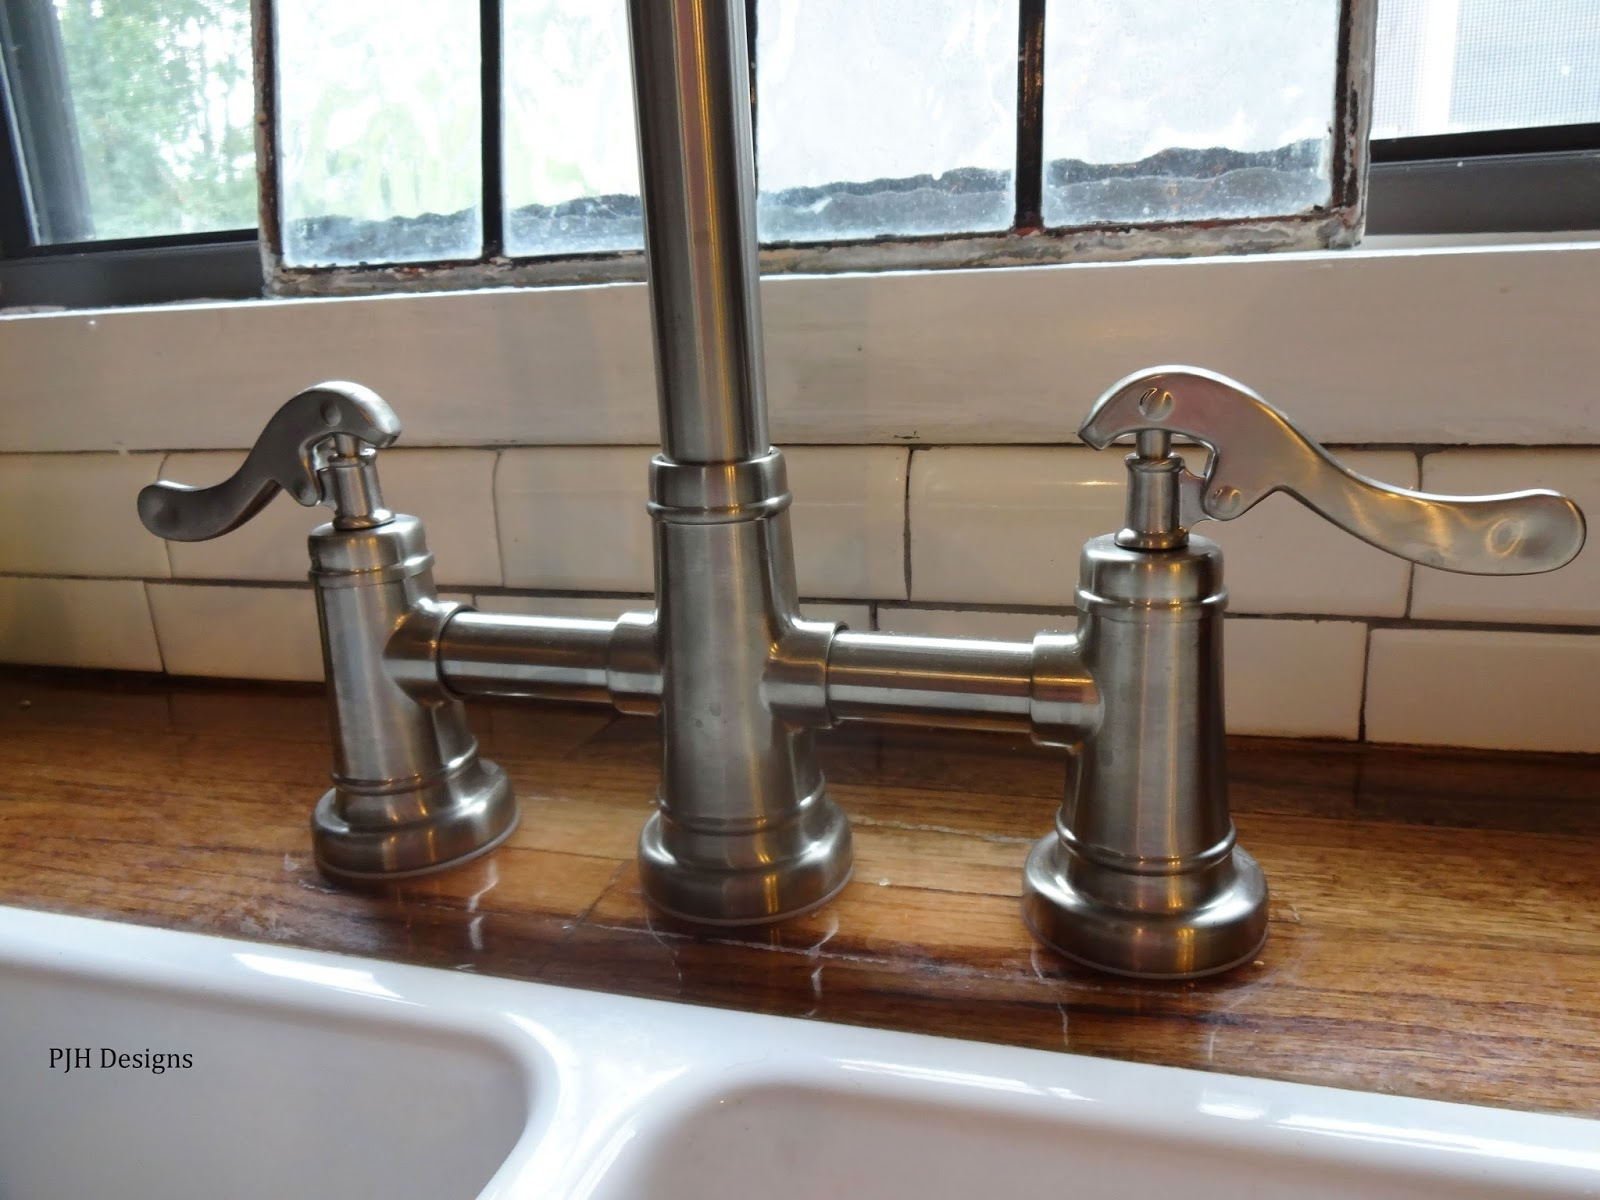 pump faucet for kitchen sink